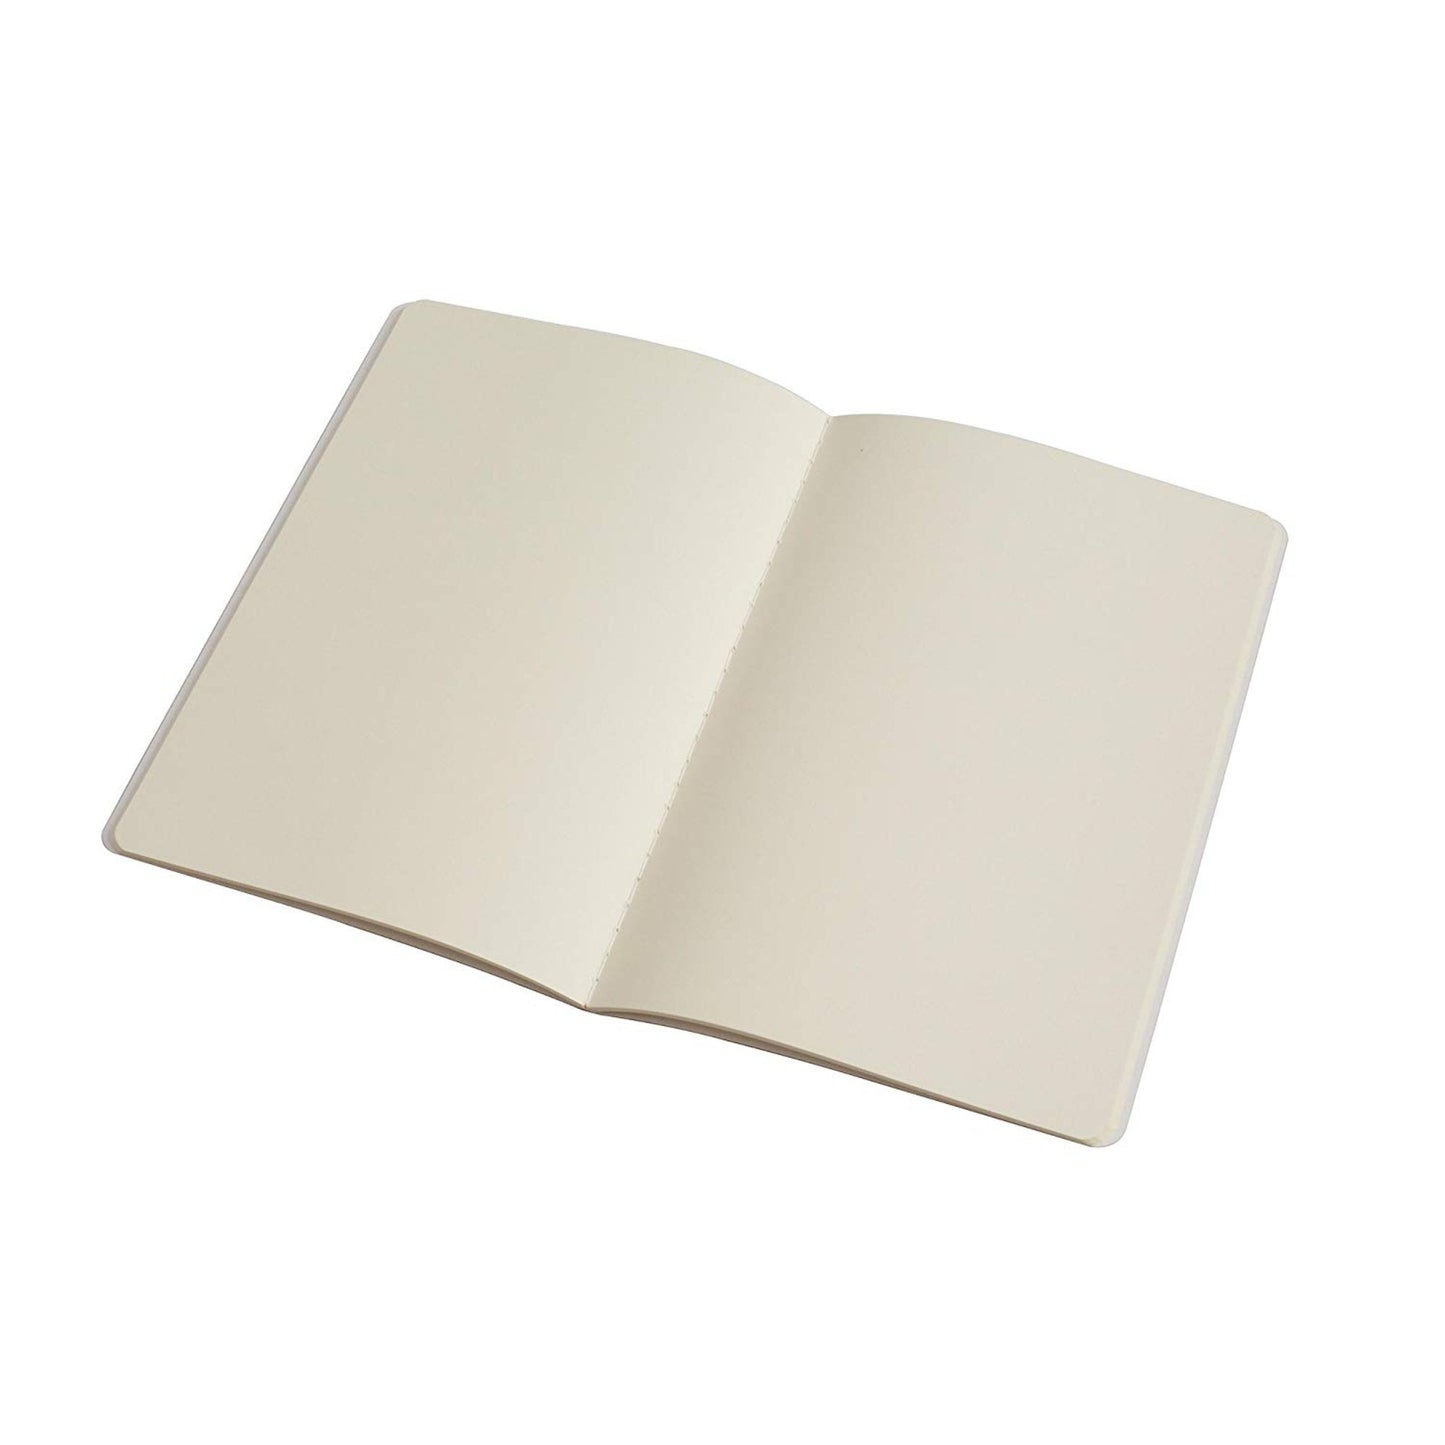 PinkPolish Design Notebook "Just Ducky" Springtime Inspired Notebook / Sketchbook / Journal